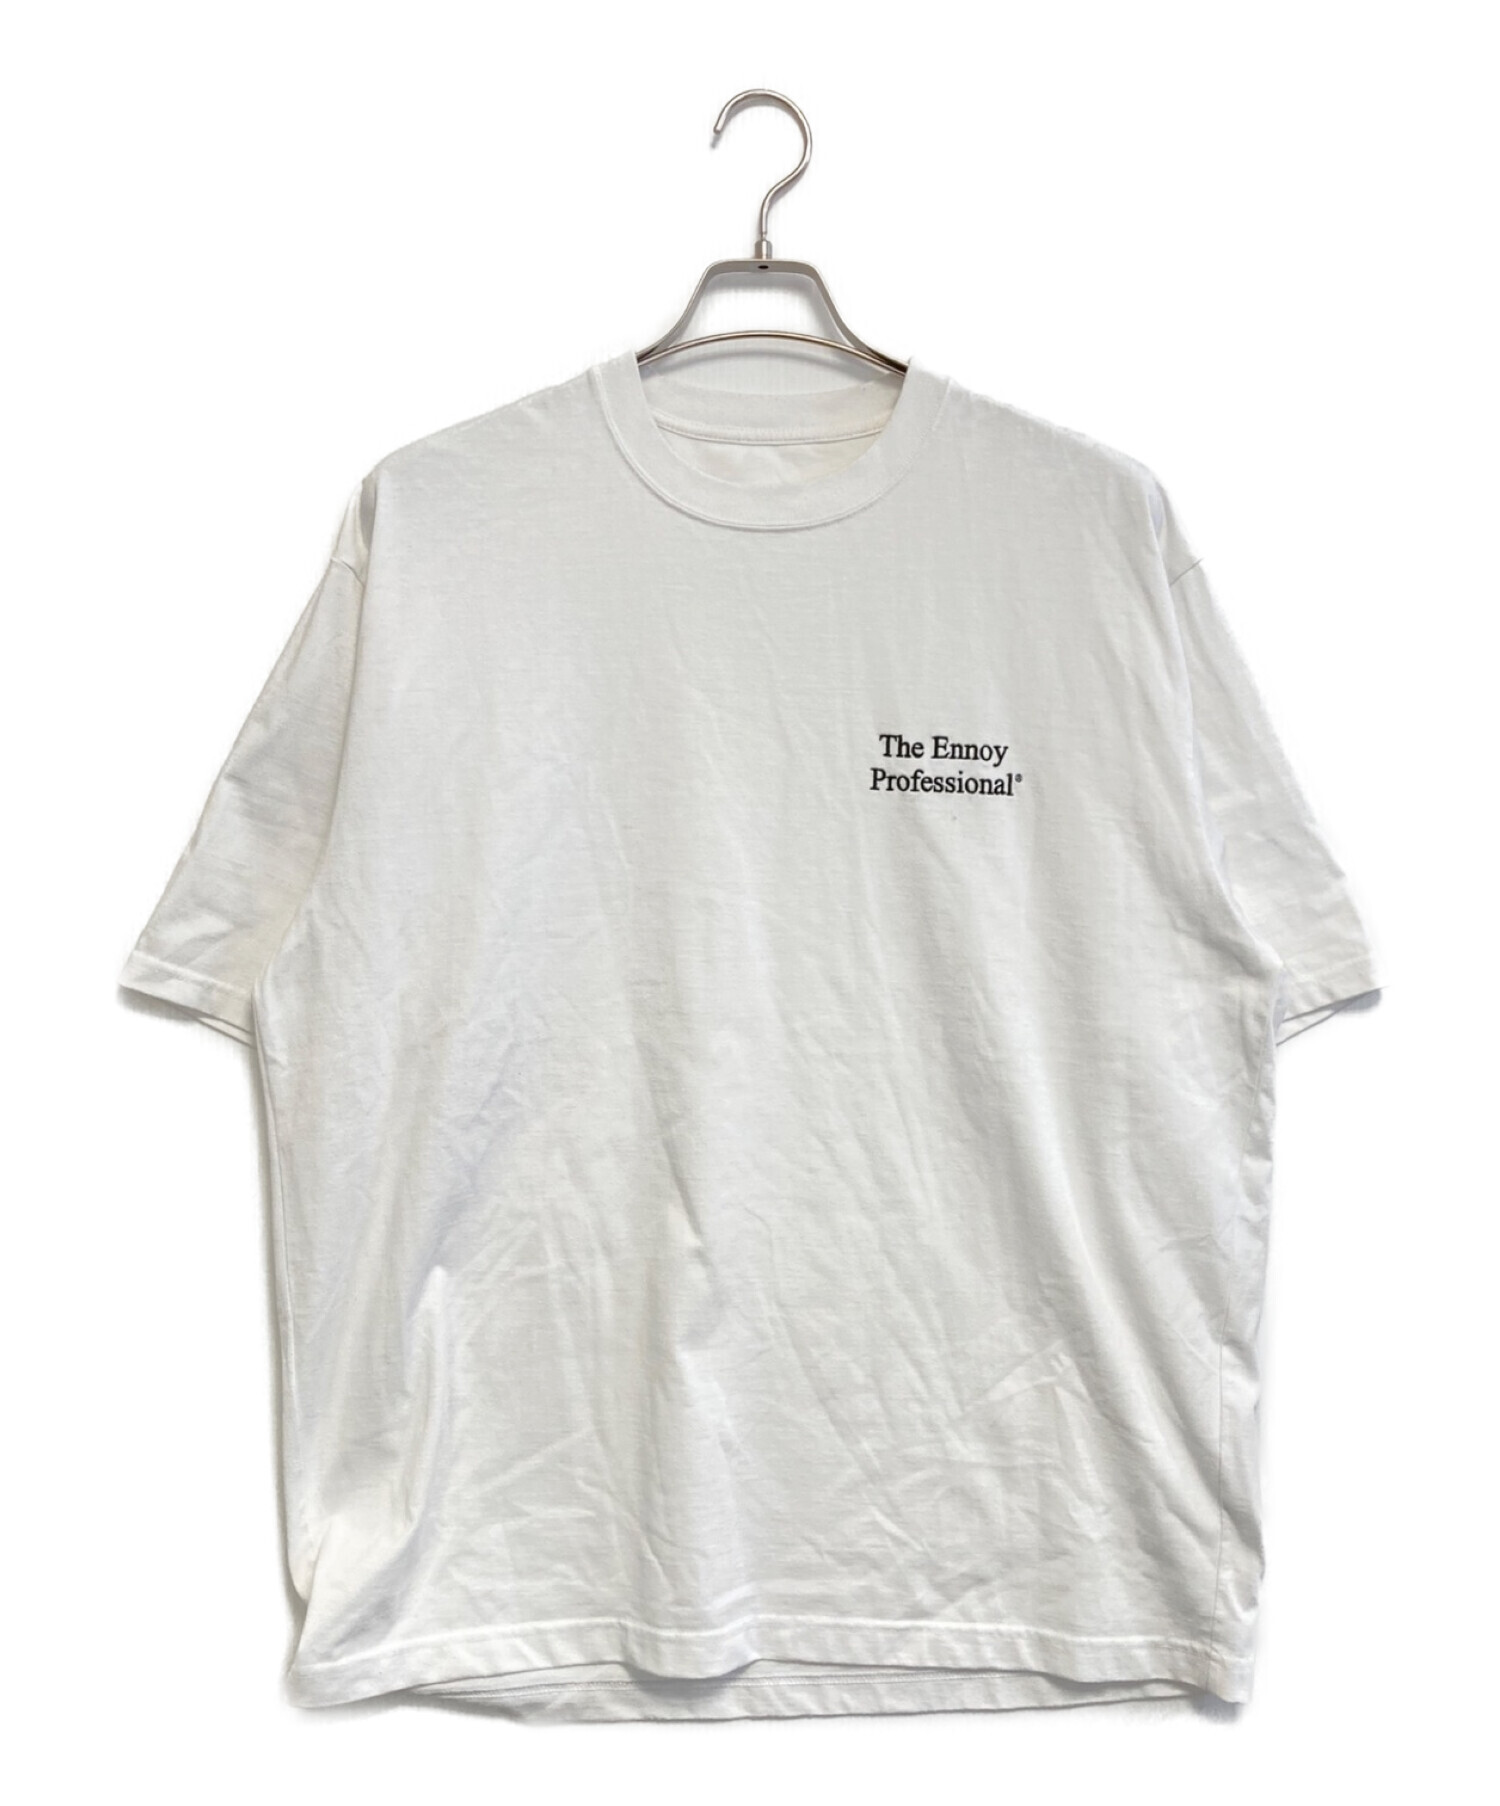 The Ennoy Professional (ザ エンノイ プロフェッショナル) 刺繍ロゴTシャツ ホワイト サイズ:XL